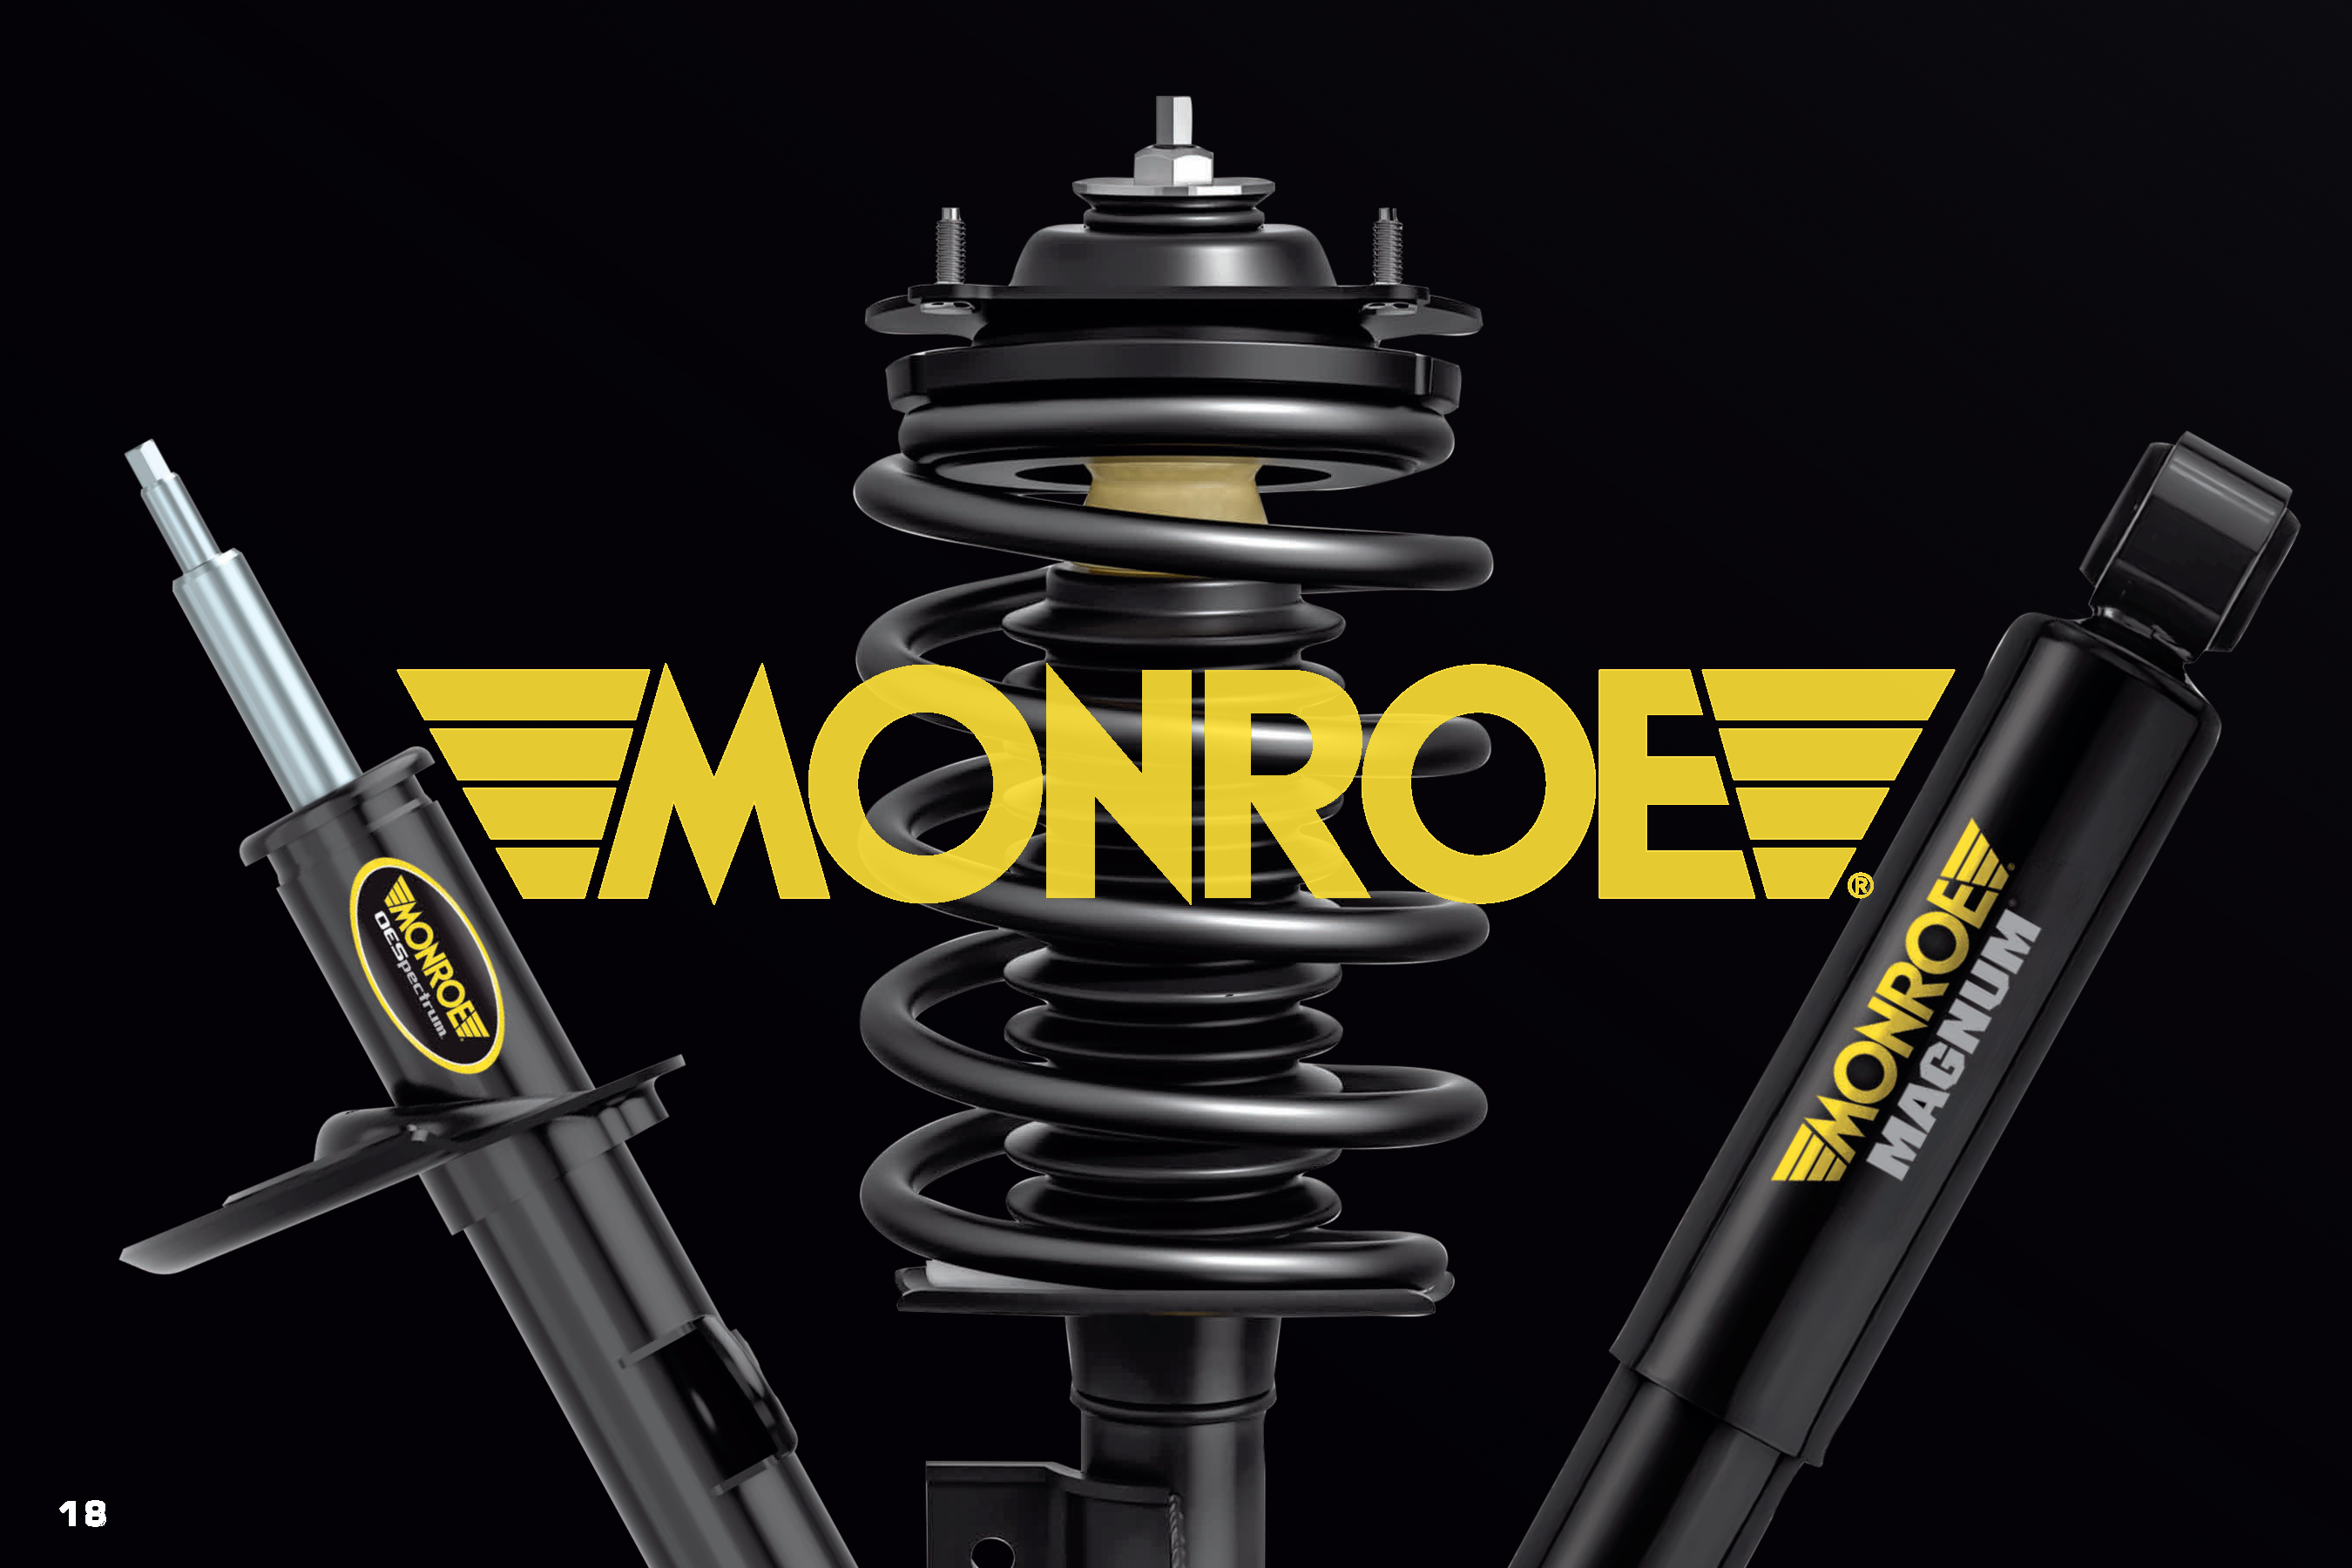 www.monroe.com